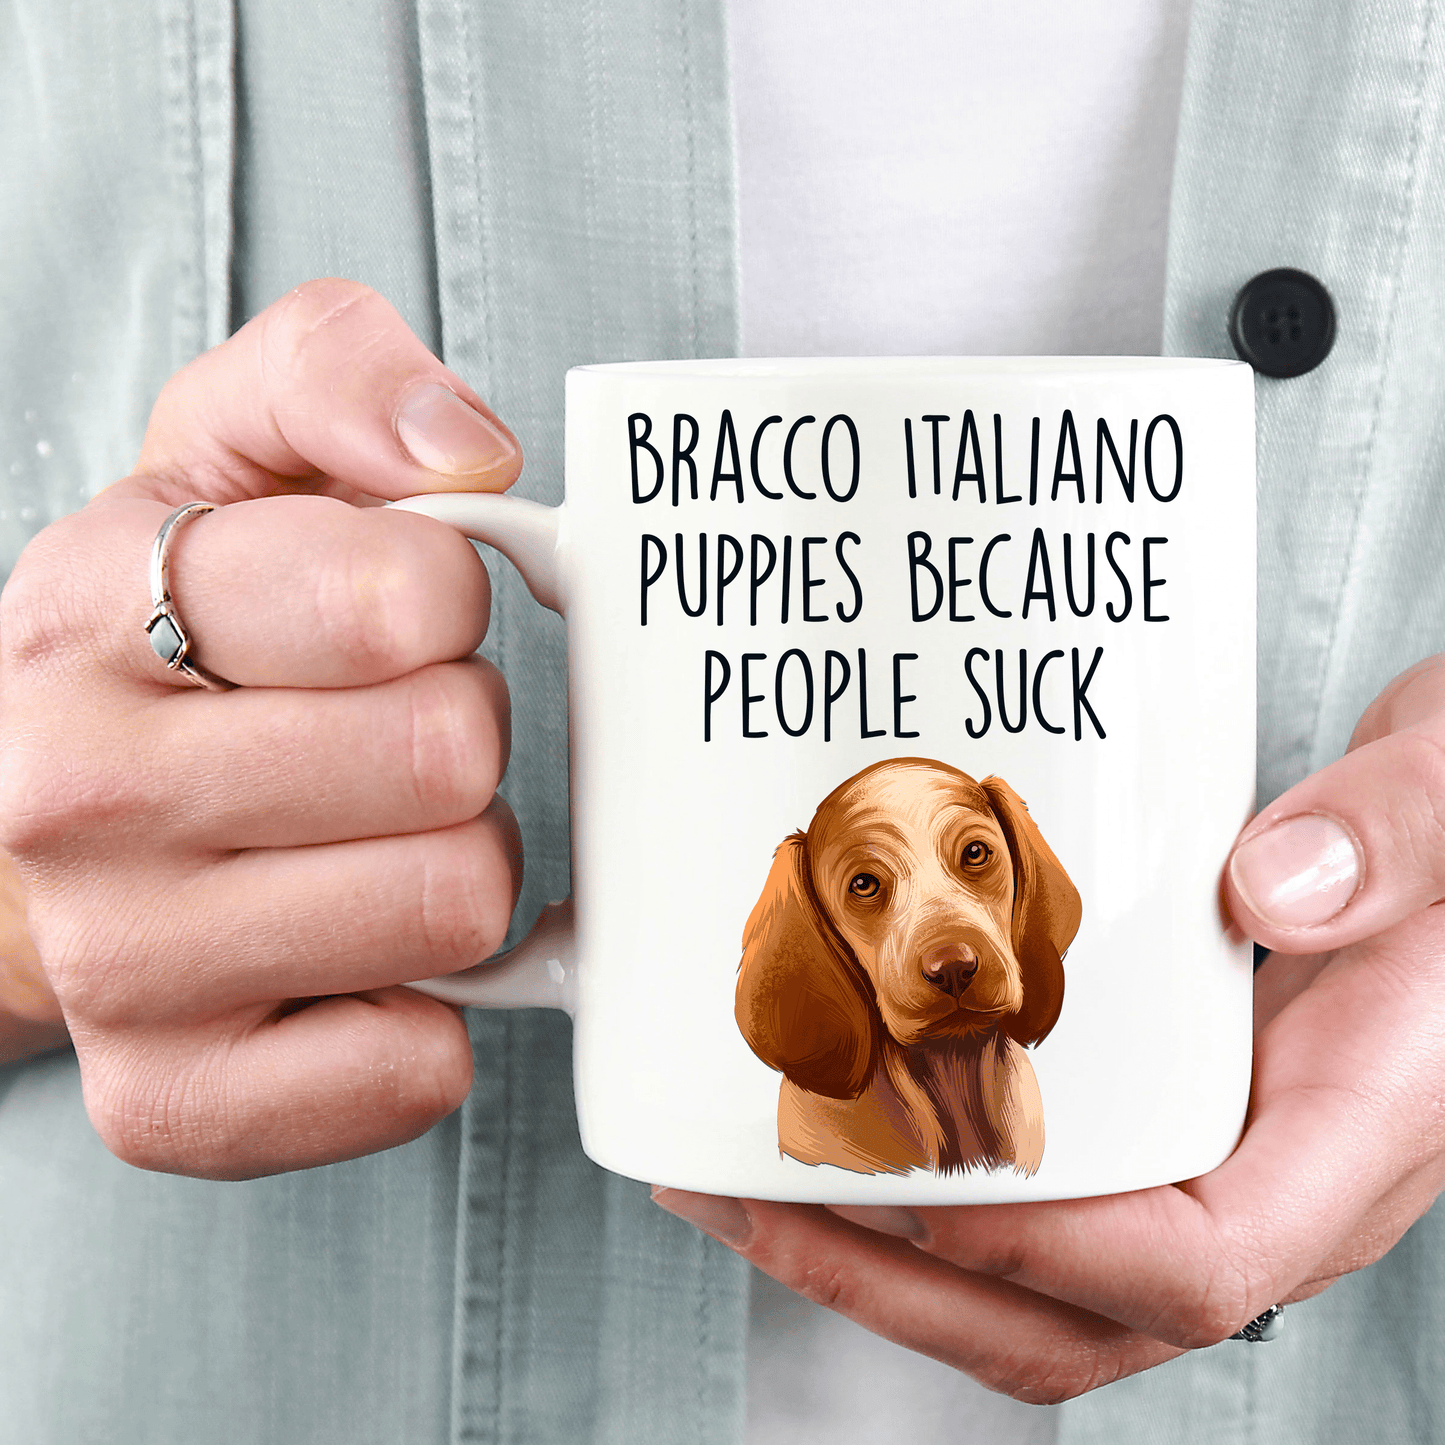 Bracco Italiano Puppies Because People Suck Funny Dog Ceramic Coffee Mug